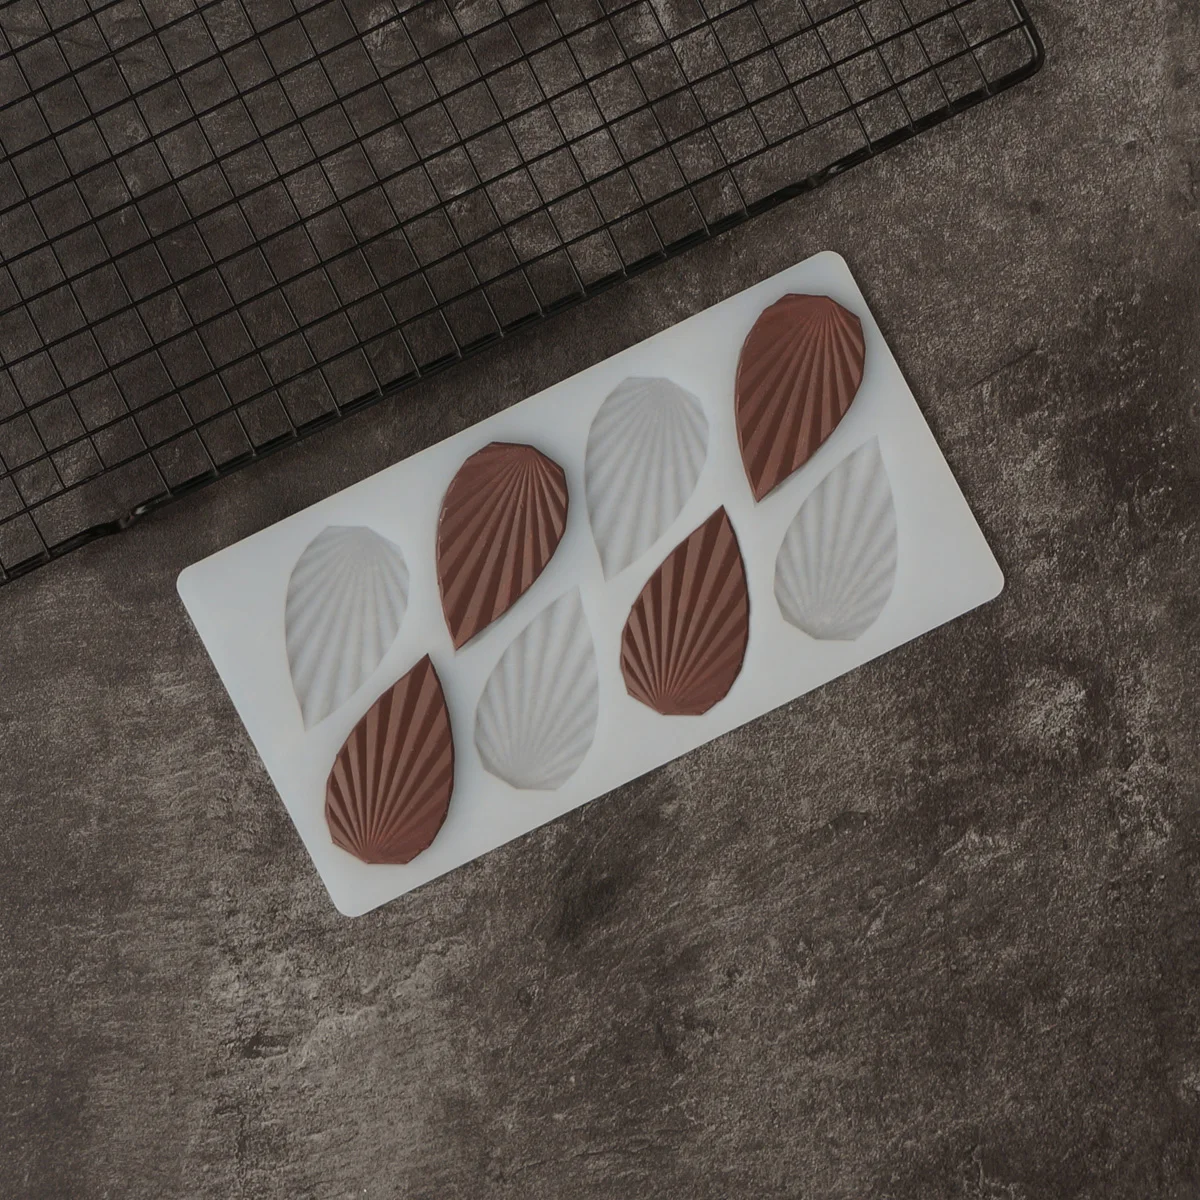 Ruffled Leaf Shape Chocolate Mold Cake Decorating Tools Leaves Shape Silicone Transfer Sheet Baking Stencil Chablon